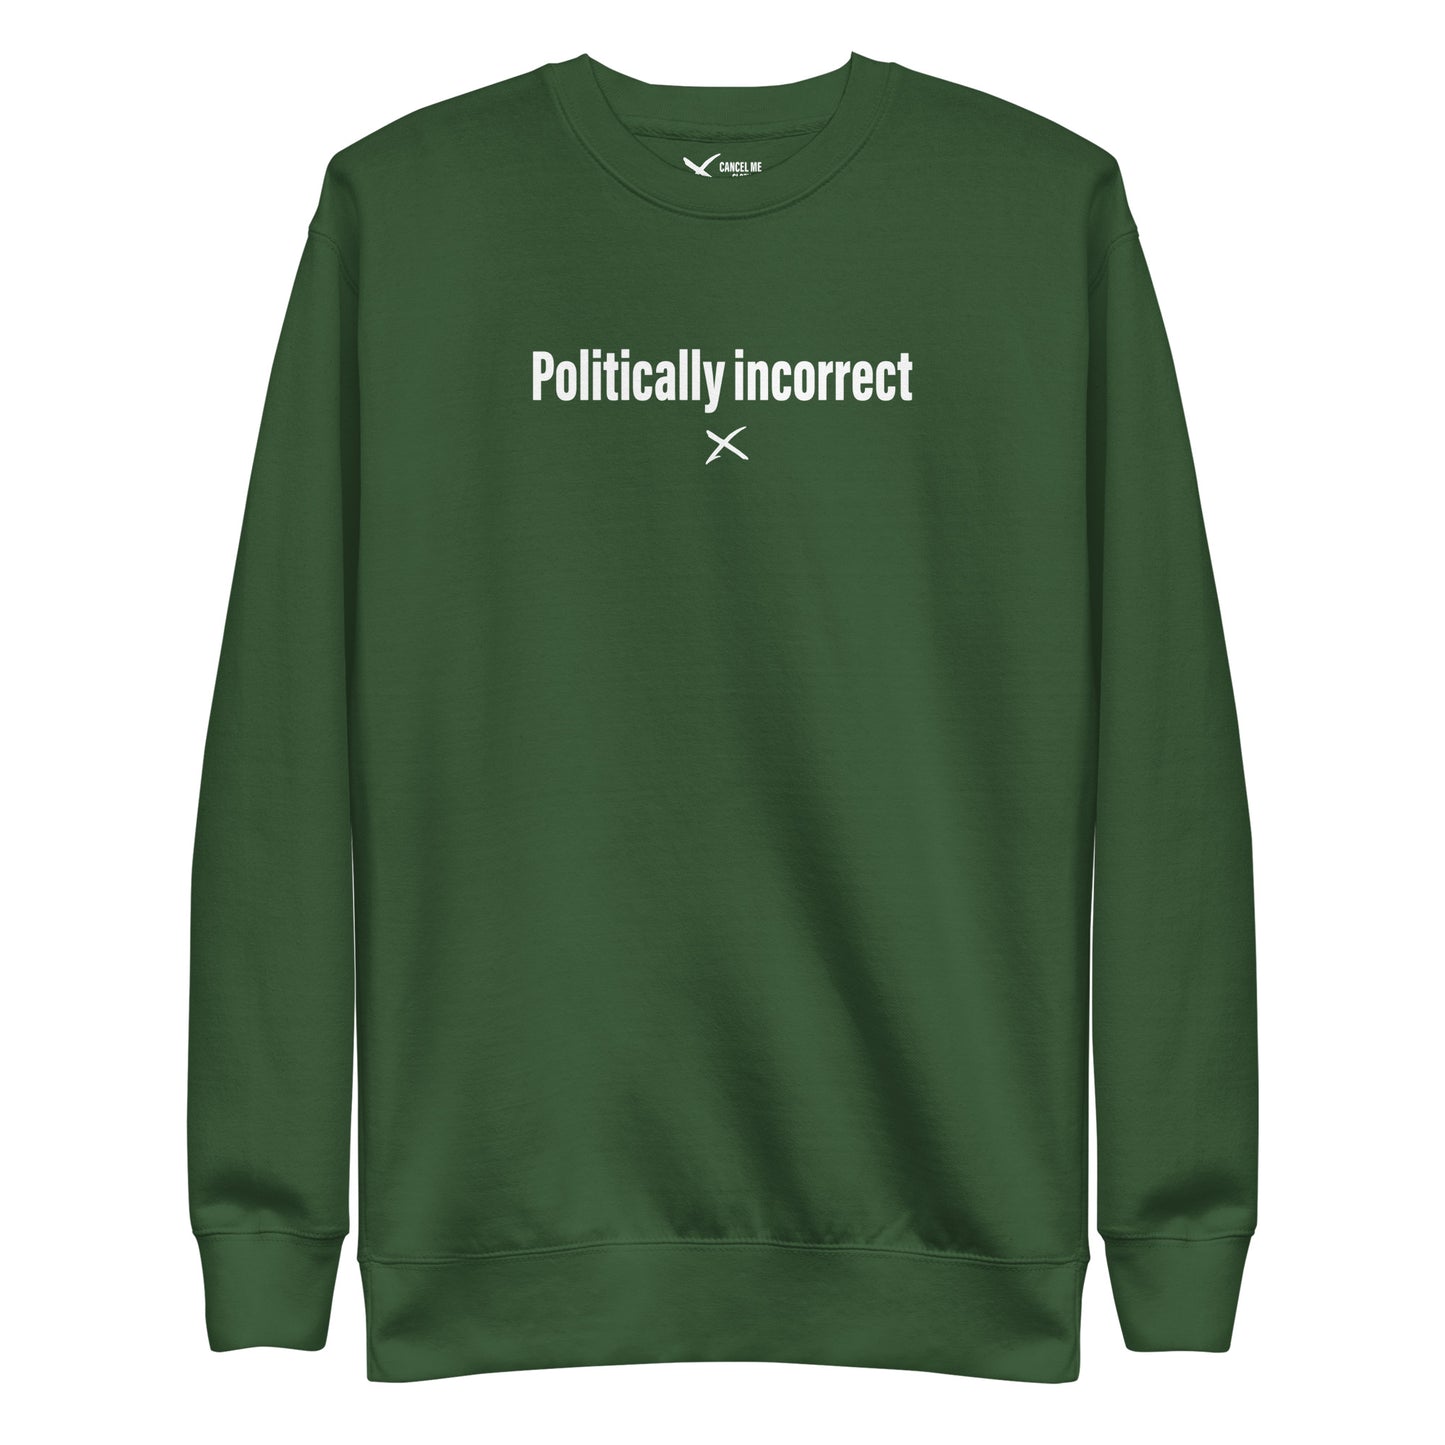 Politically incorrect - Sweatshirt